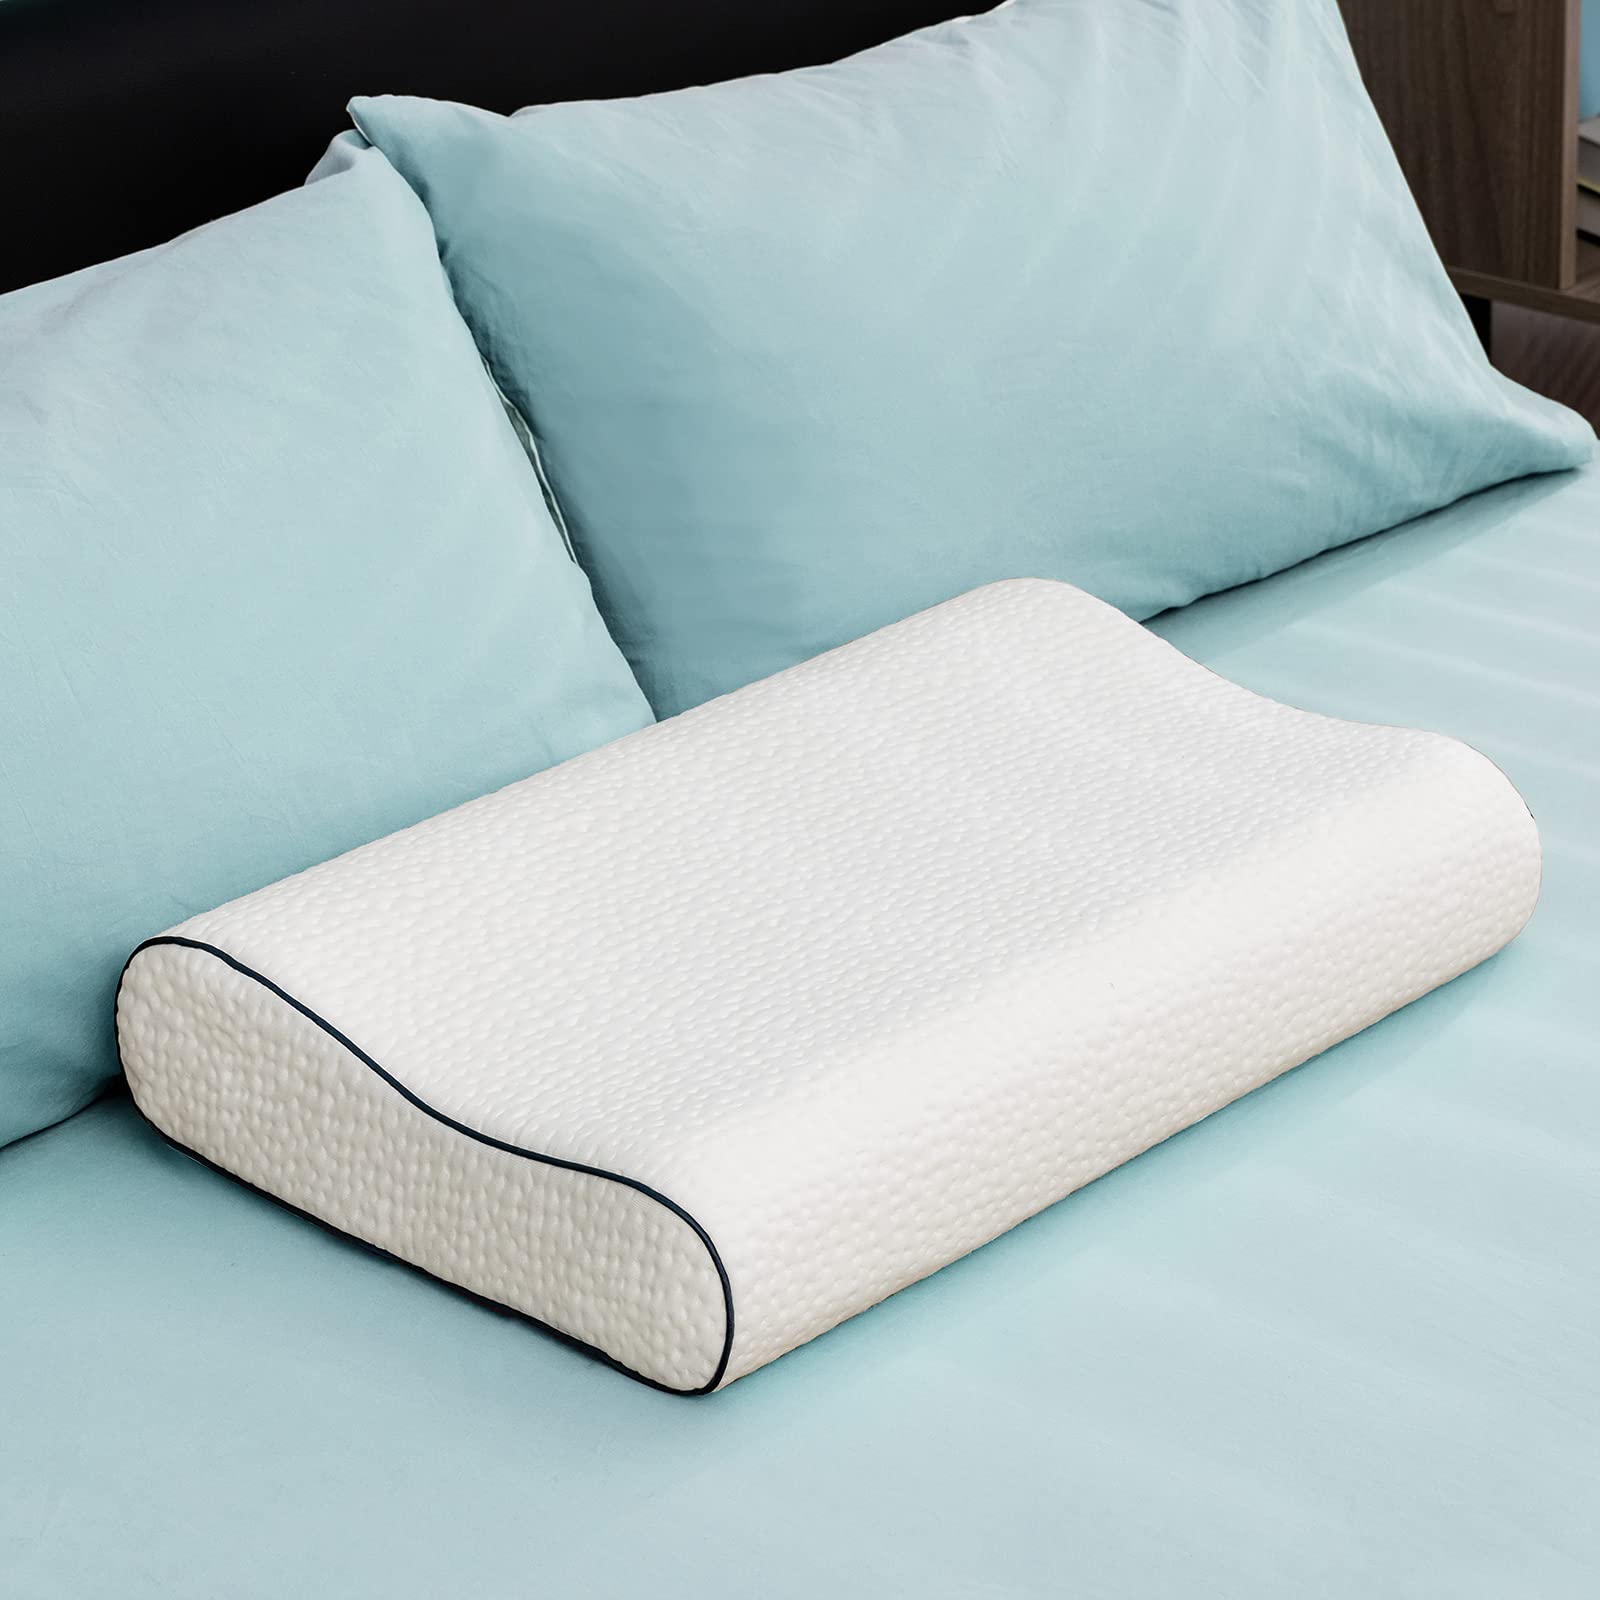 Giantex Memory Foam Pillow, Ergonomic Cervical Support Sleeping Pillow for Neck & Shoulder Relieve